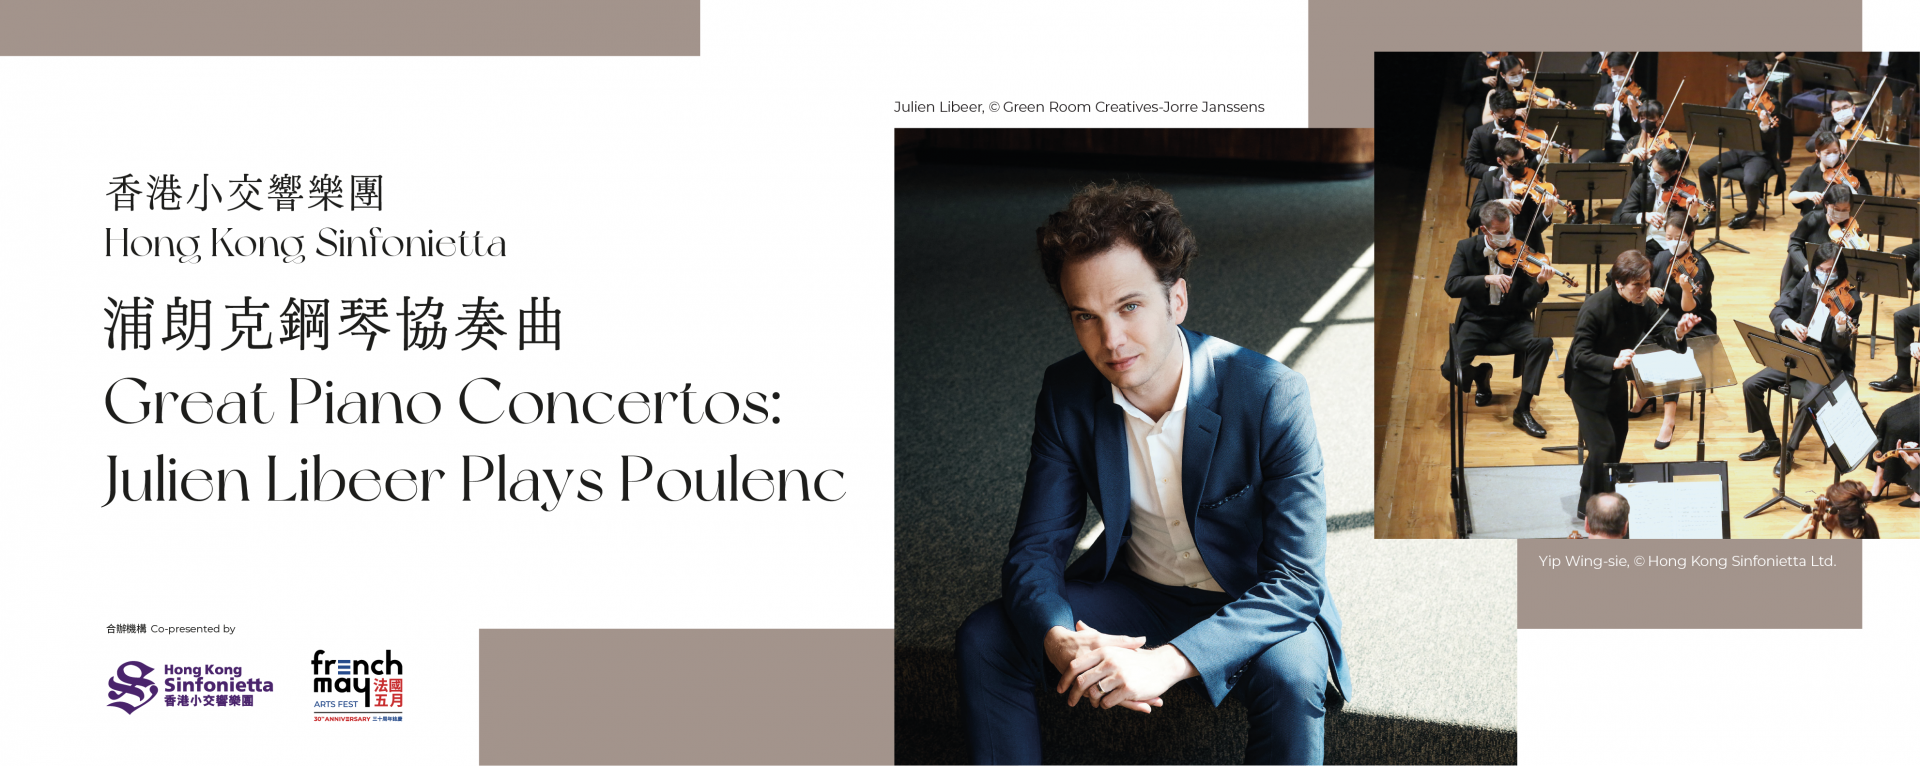 Great Piano Concertos: Julien Libeer Plays Poulenc